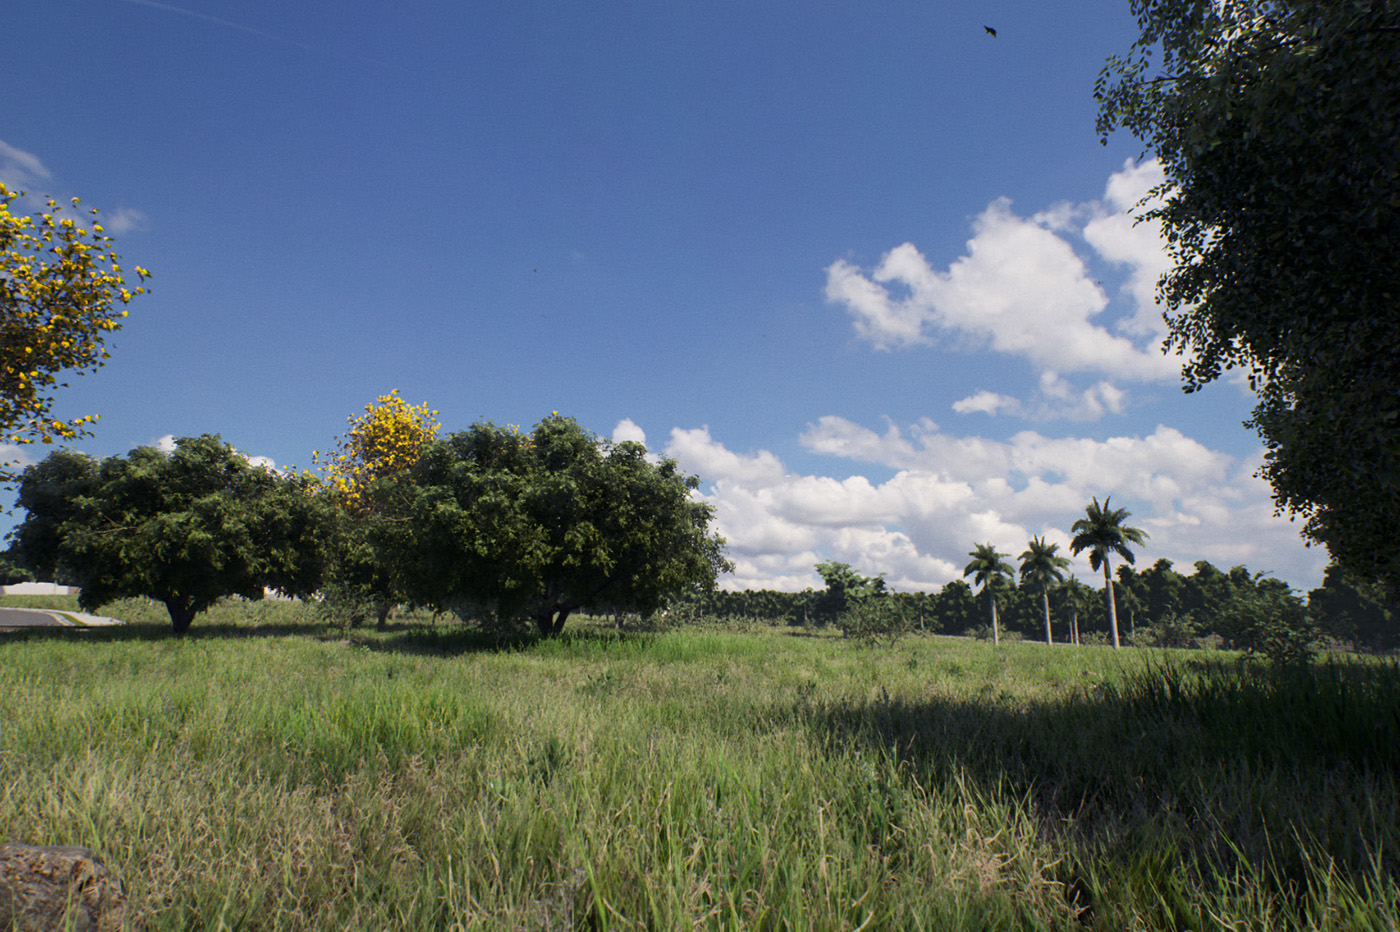 Unreal Engine UE4 archviz 3D CGI CG SpeedTree foliage environment game engine